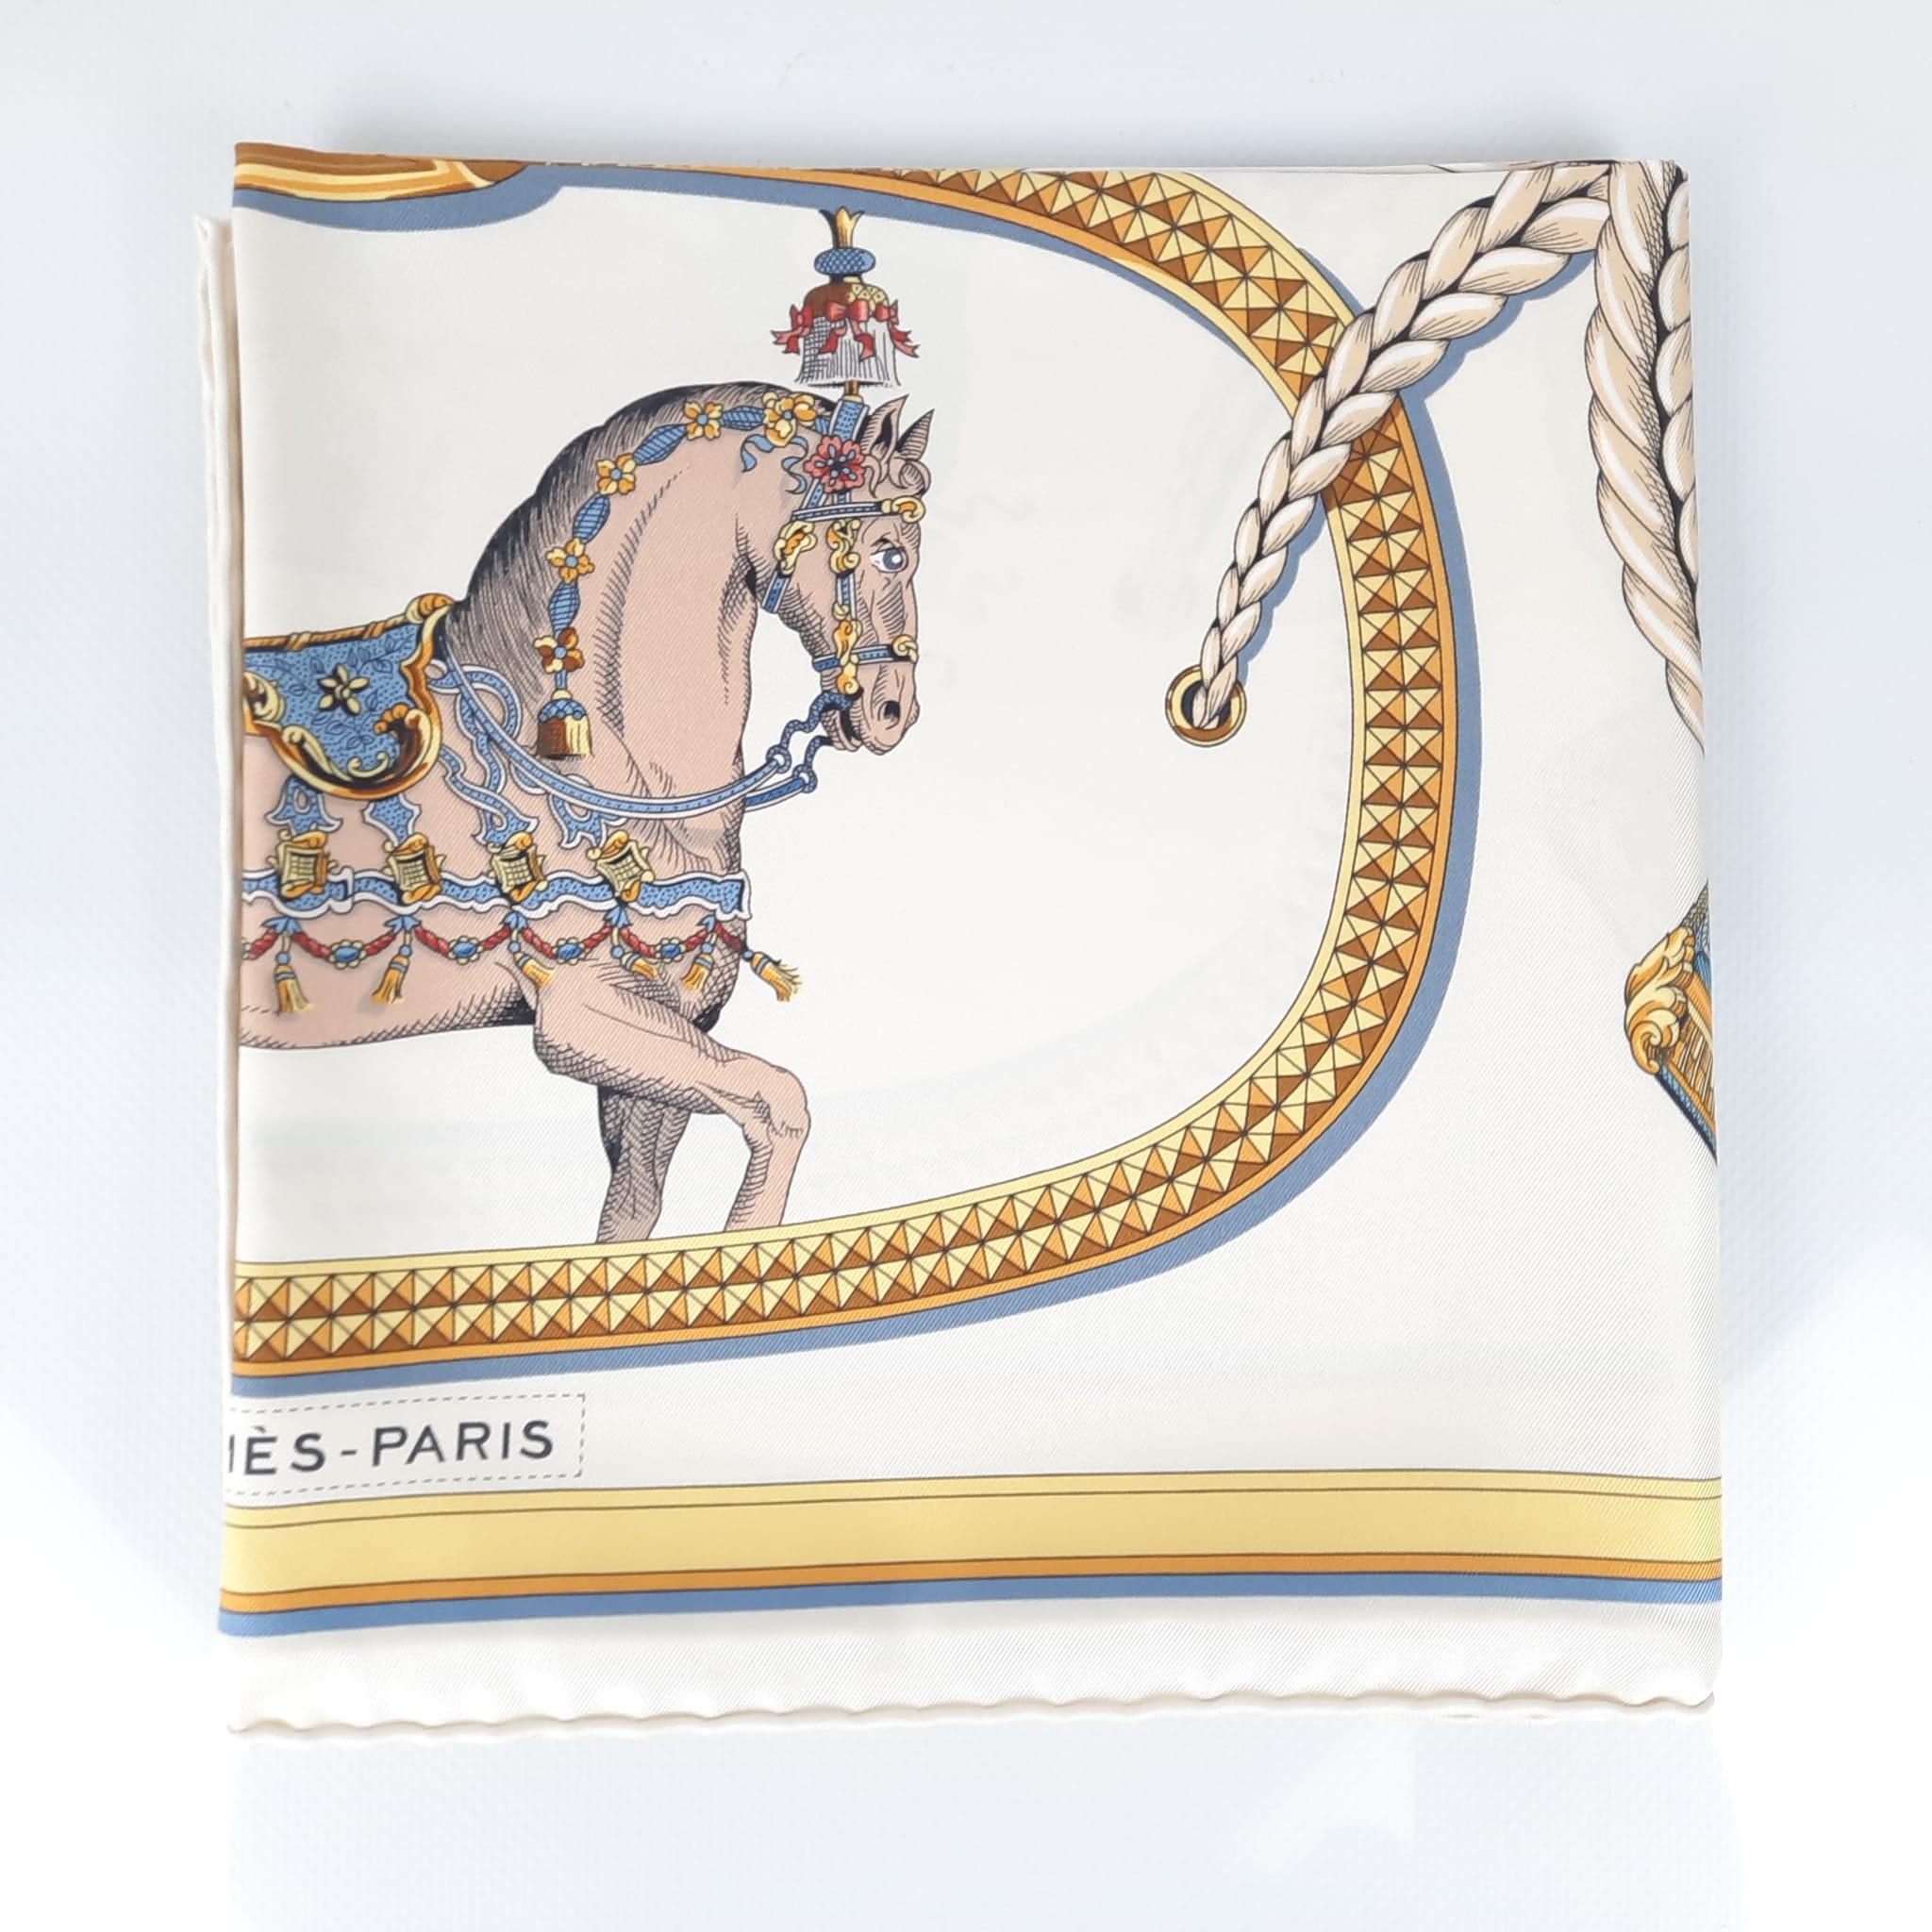  Hermes Crème / Gold / Multicolore Grand Apparat forever scarf 90 Pour femmes 